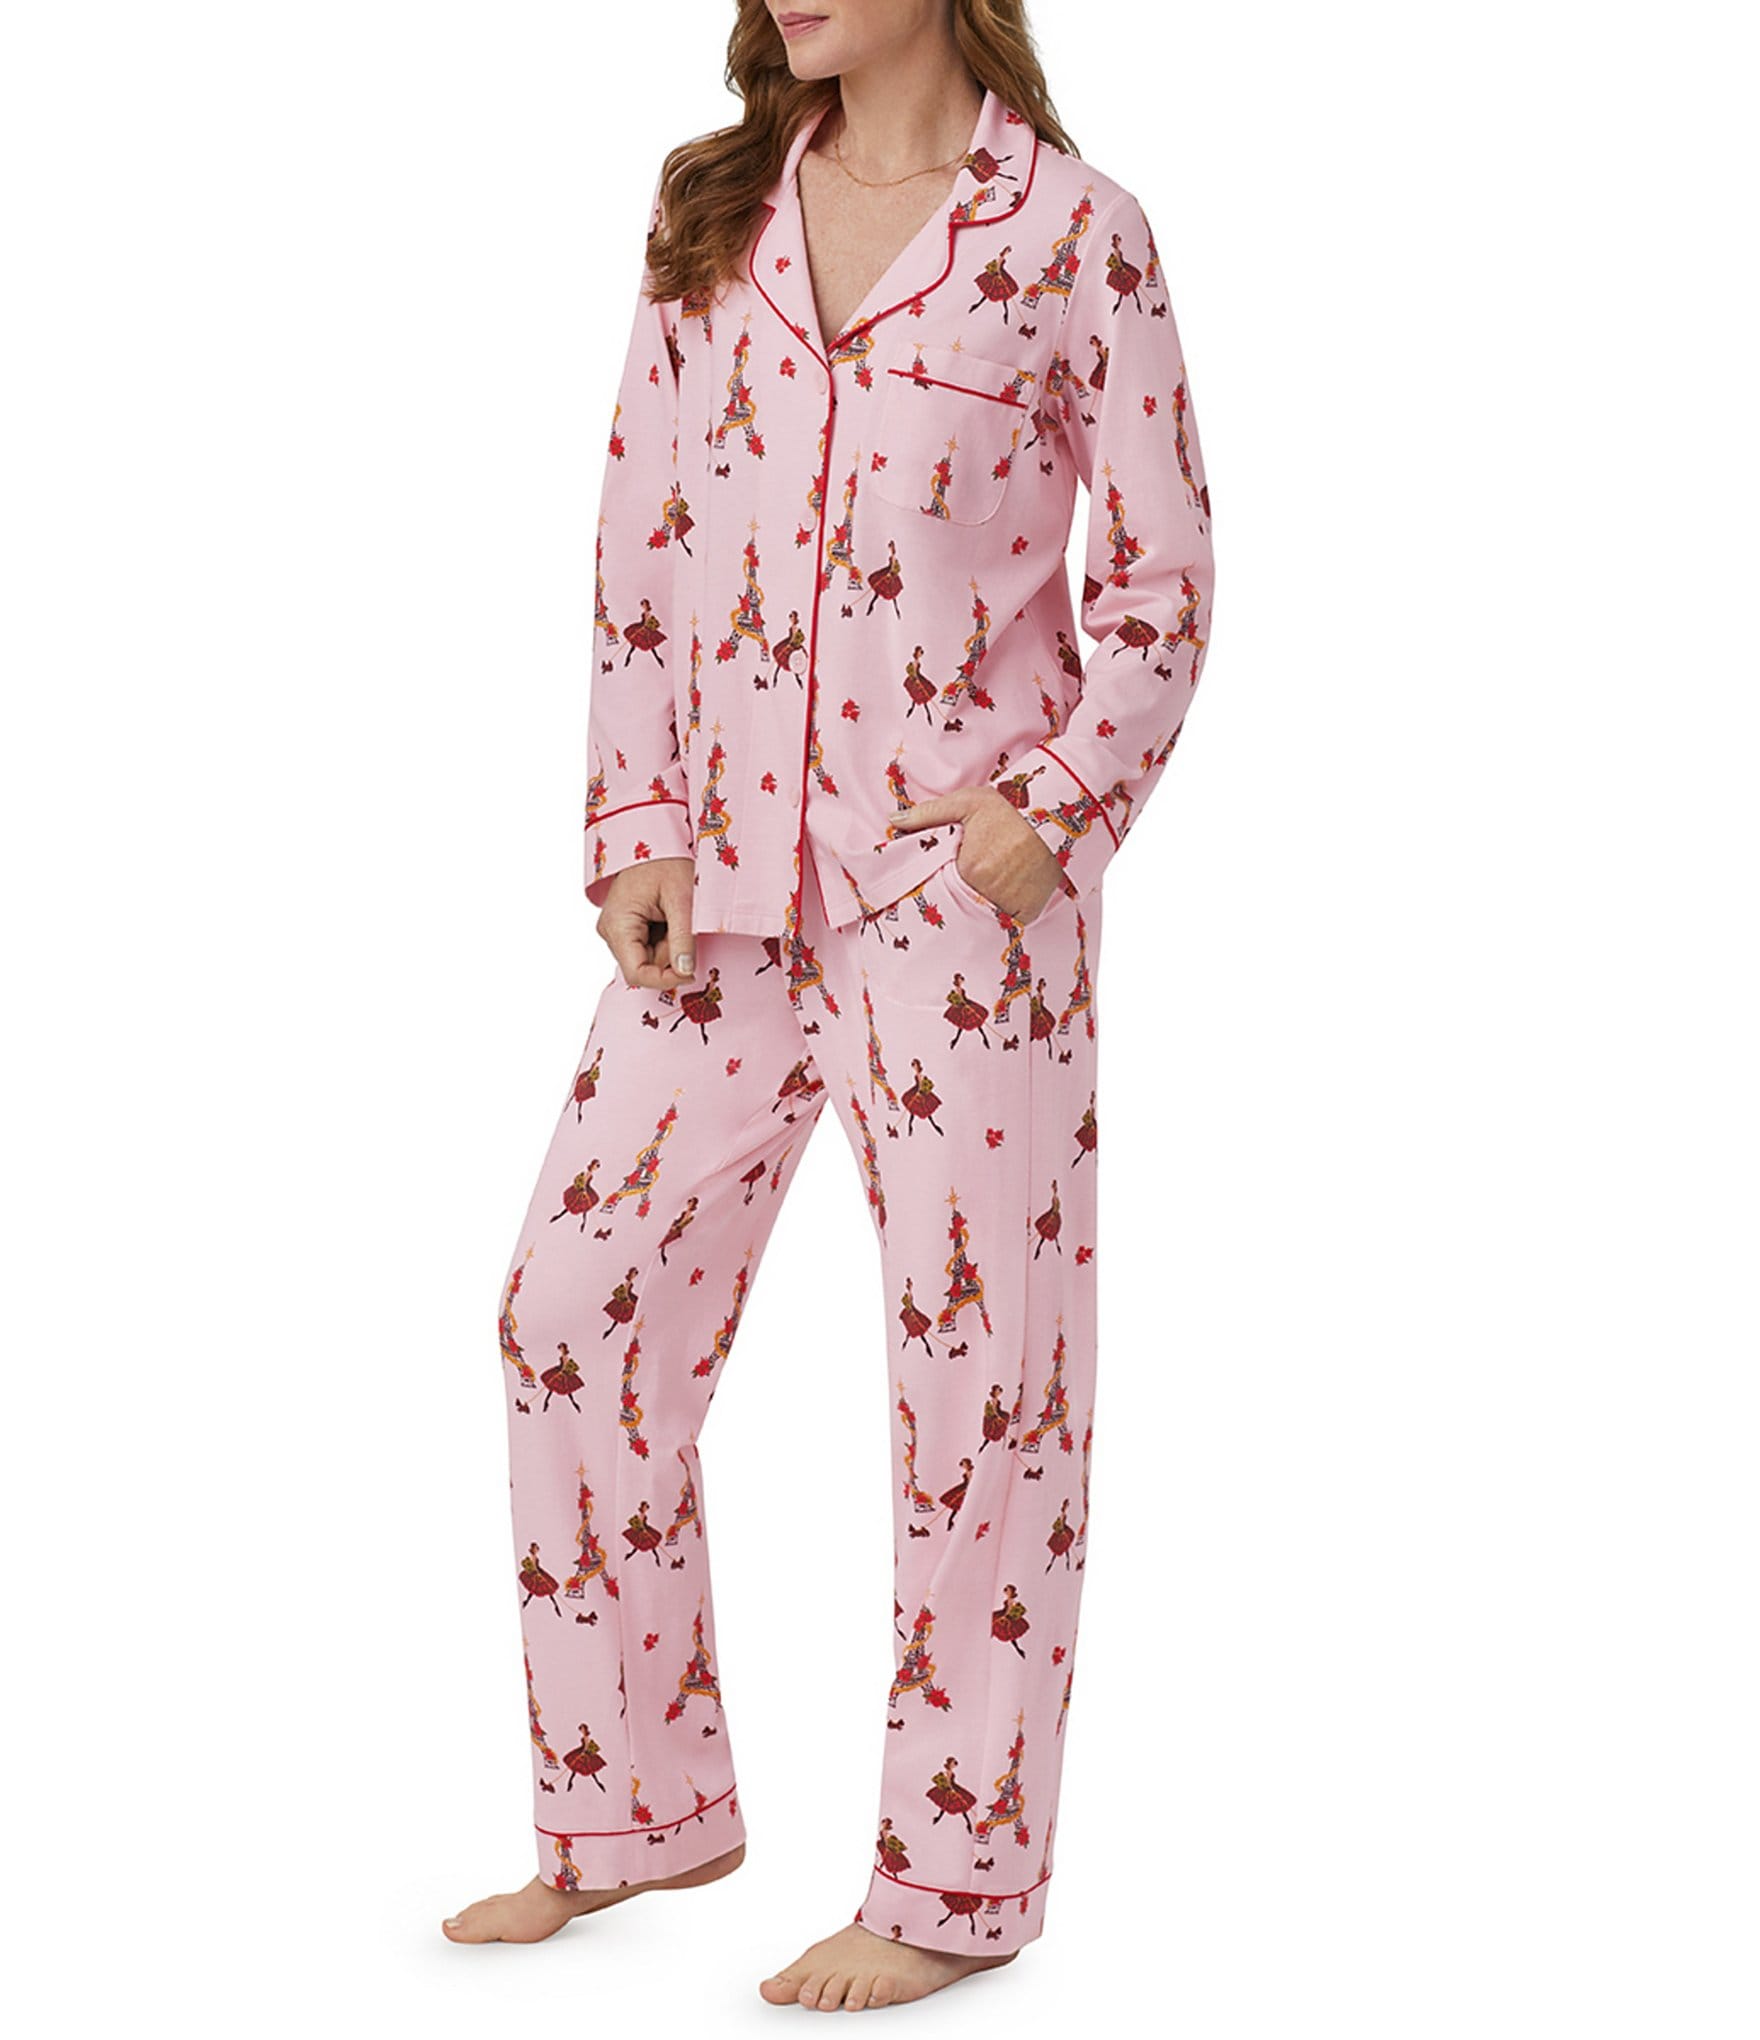 True Love Pajamas in Women's Jersey, Pajamas for Women